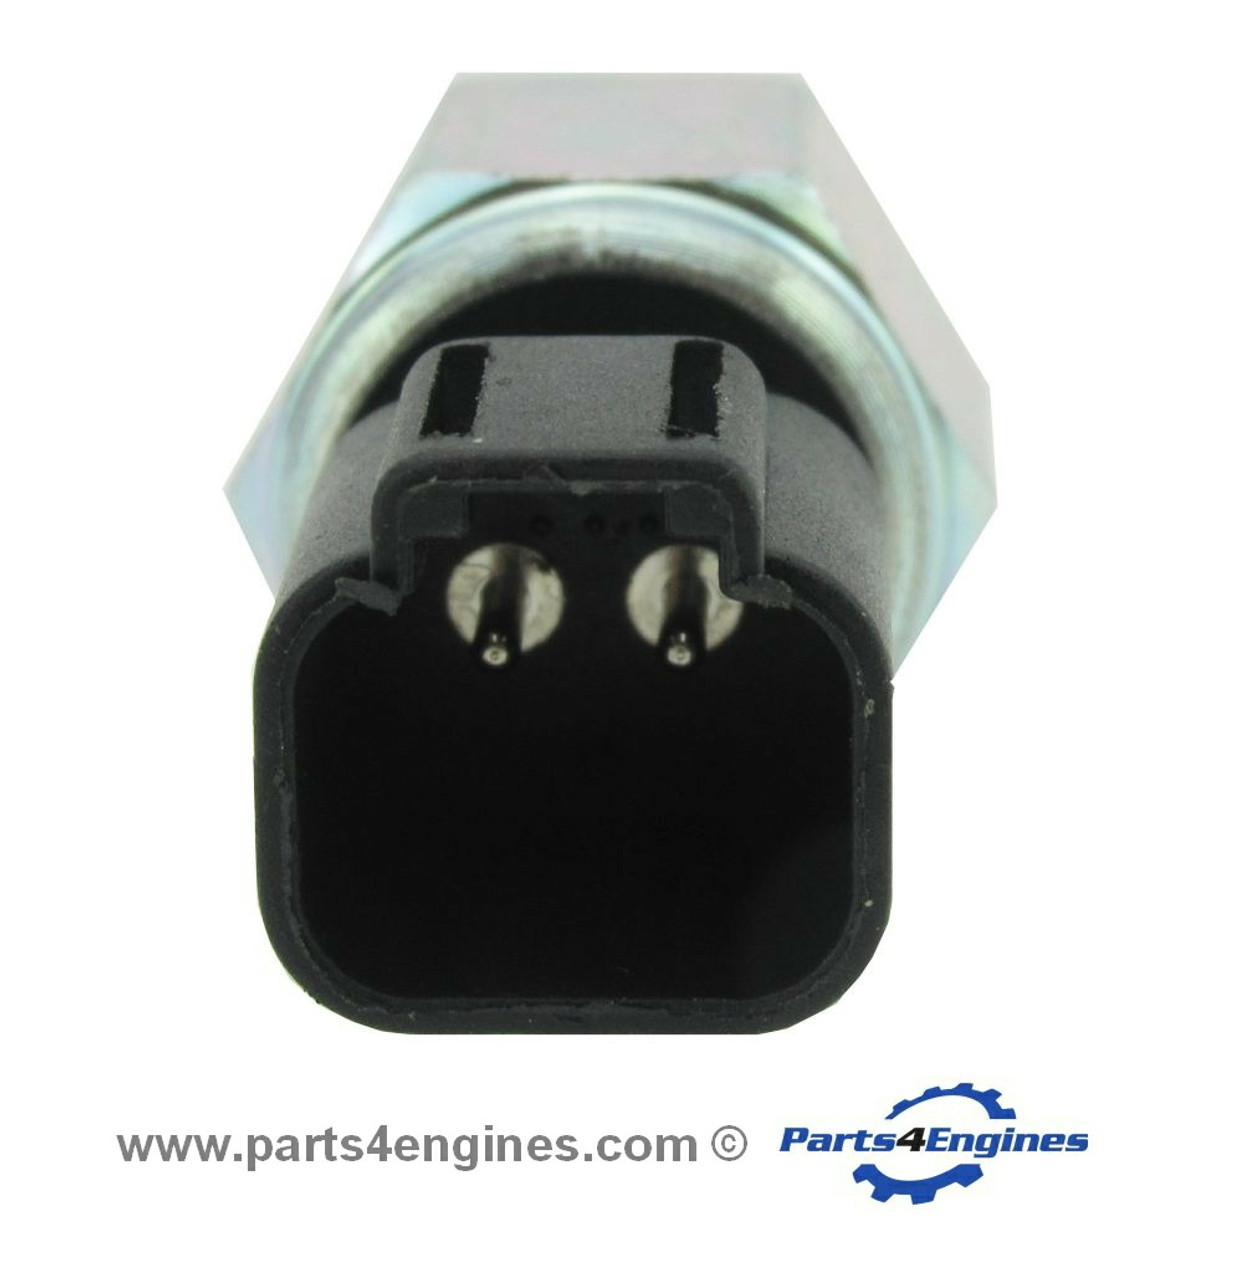 Perkins 400 series oil pressure switch - Parts4Engine.com